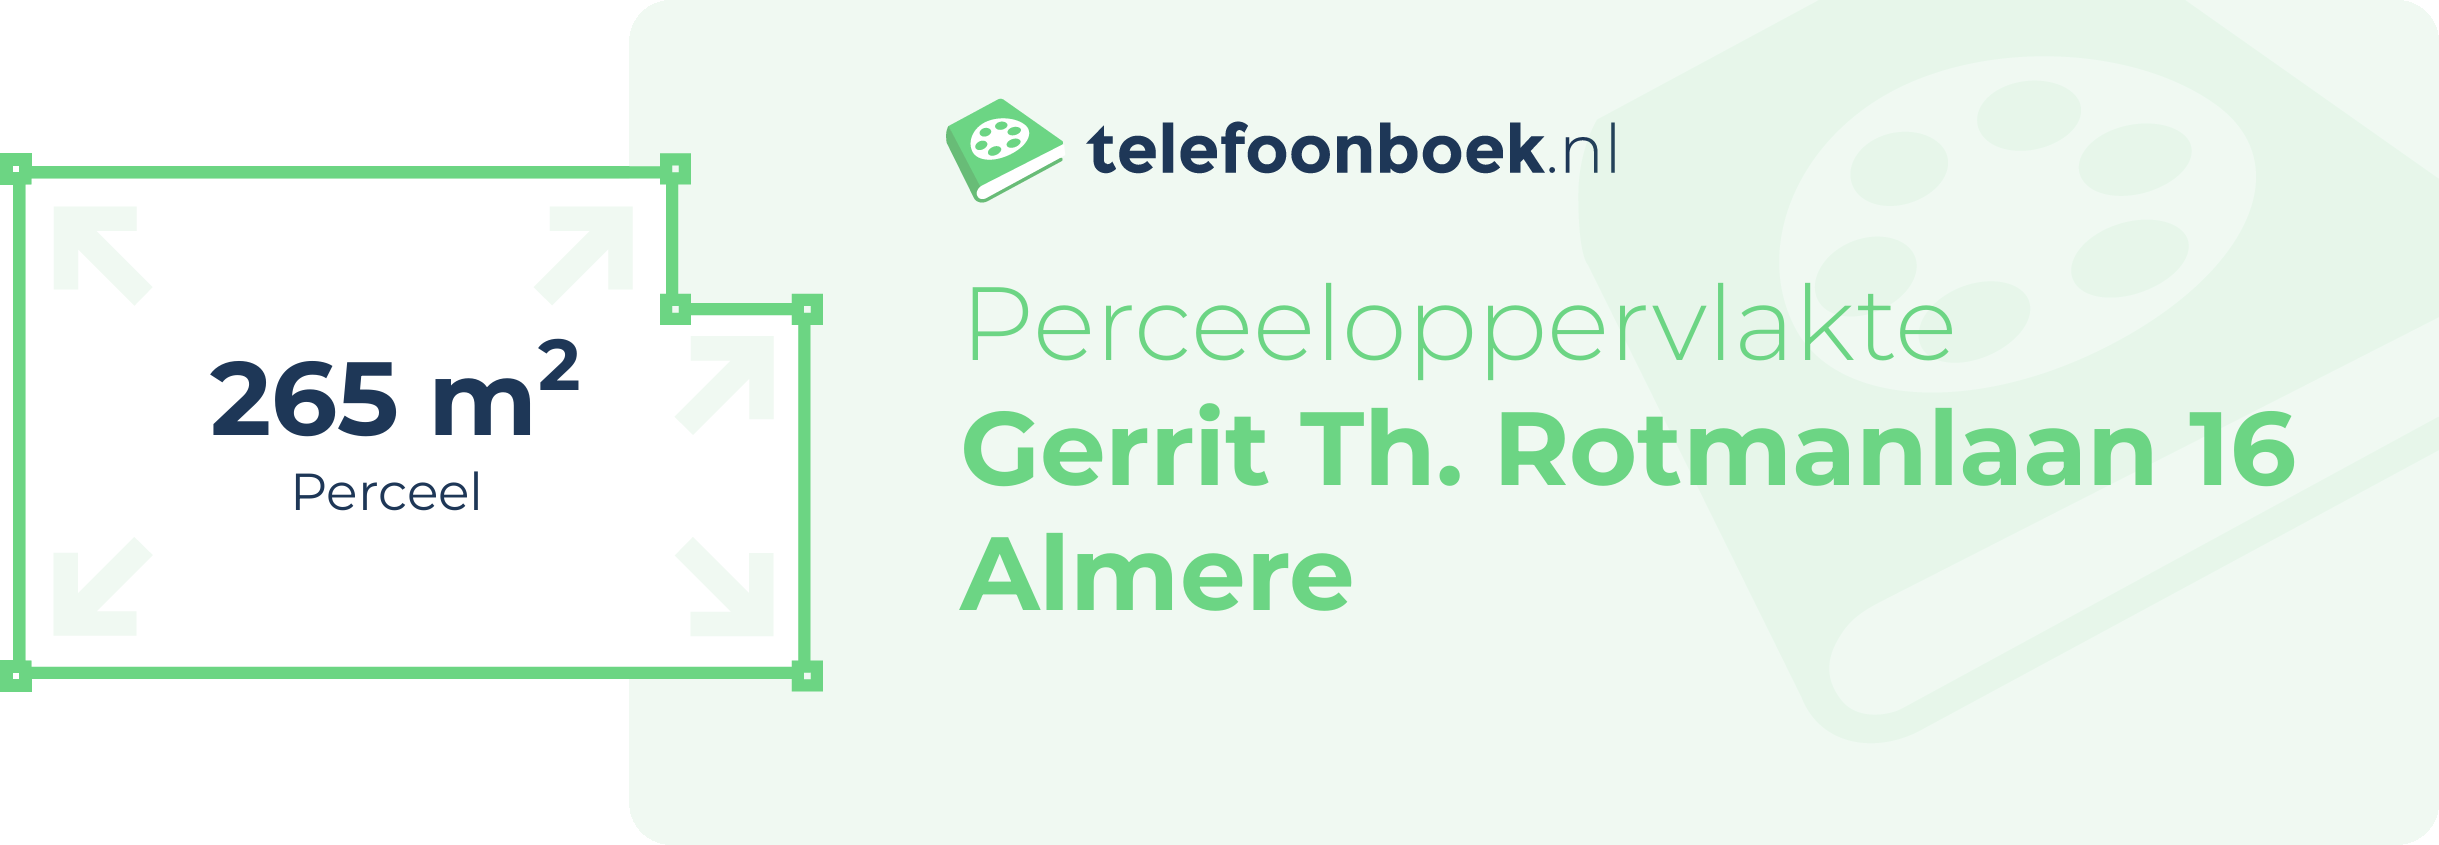 Perceeloppervlakte Gerrit Th. Rotmanlaan 16 Almere